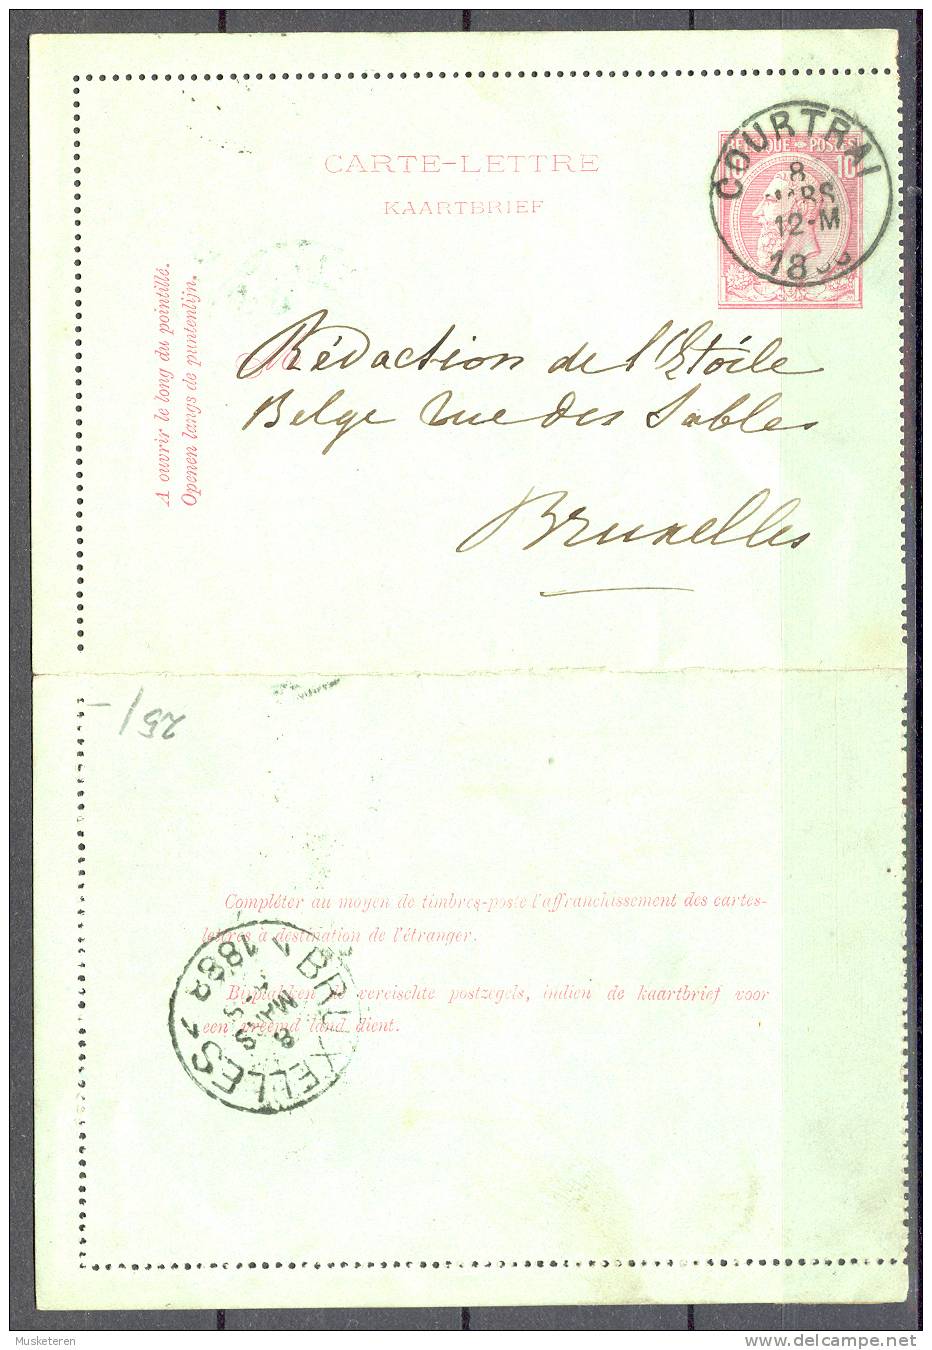 Belgium Postal Stationery Ganzsache Carte-Lettre Letter Card Deluxe COUTRAI Cancel 1888 To Bruxelles - Cartes-lettres